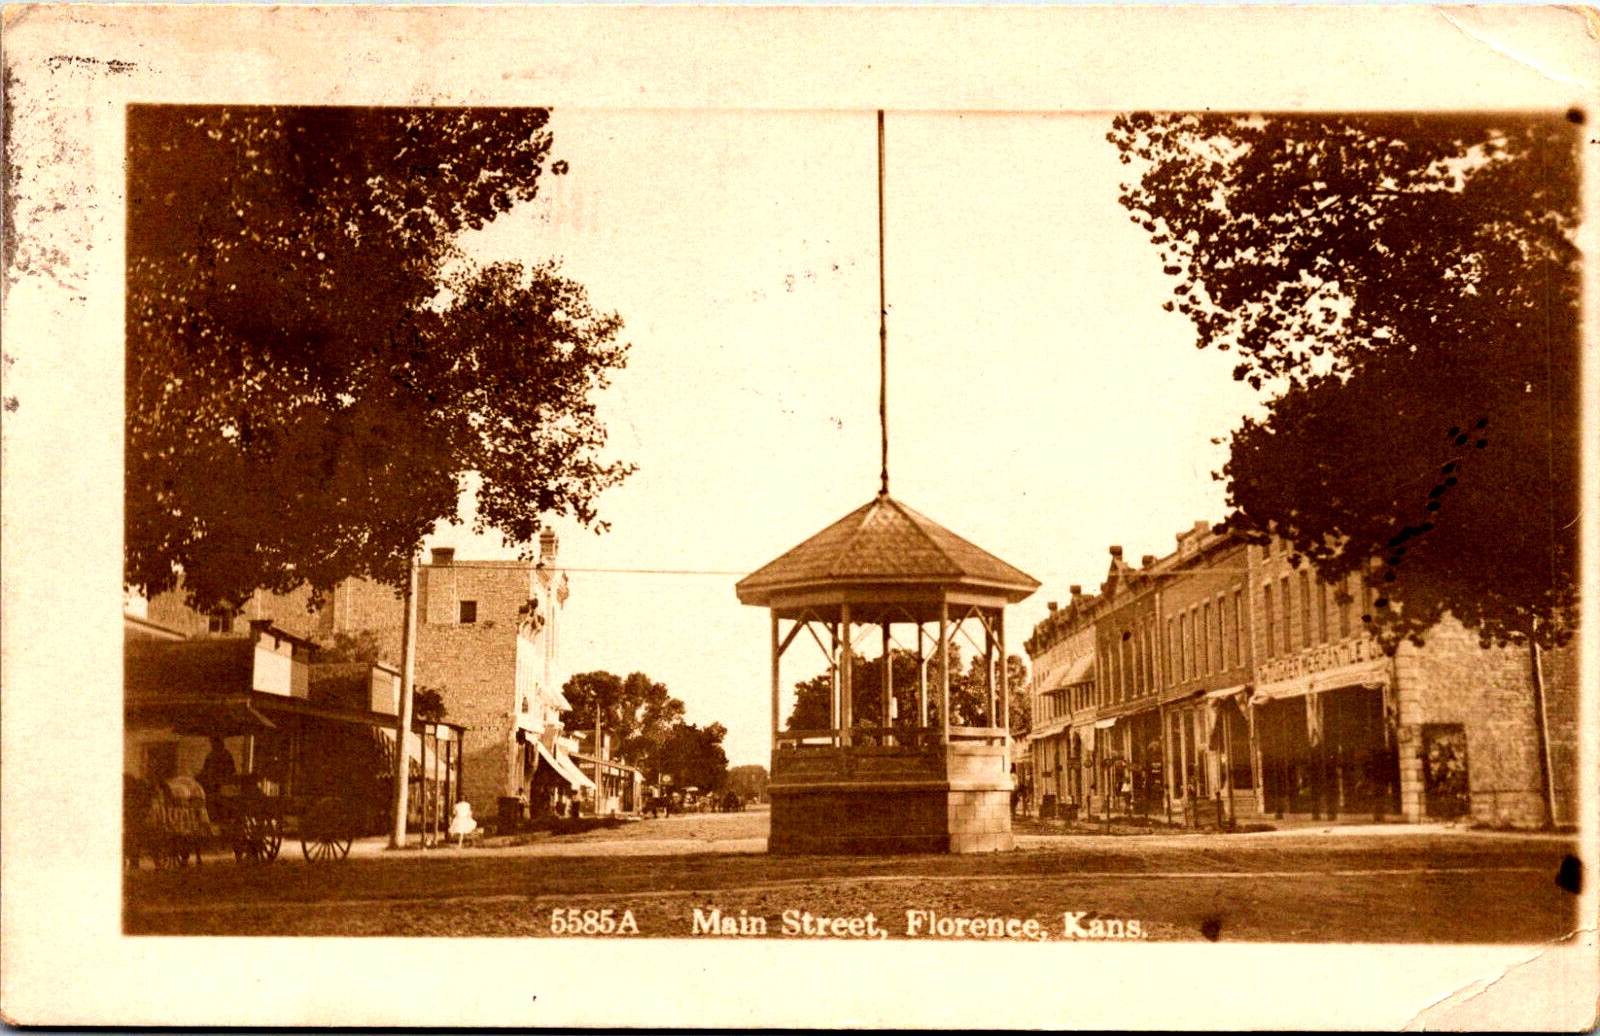 Antique RPPC Real Photo Postcard Florence, Kansas Main Street 1912 Band Stand